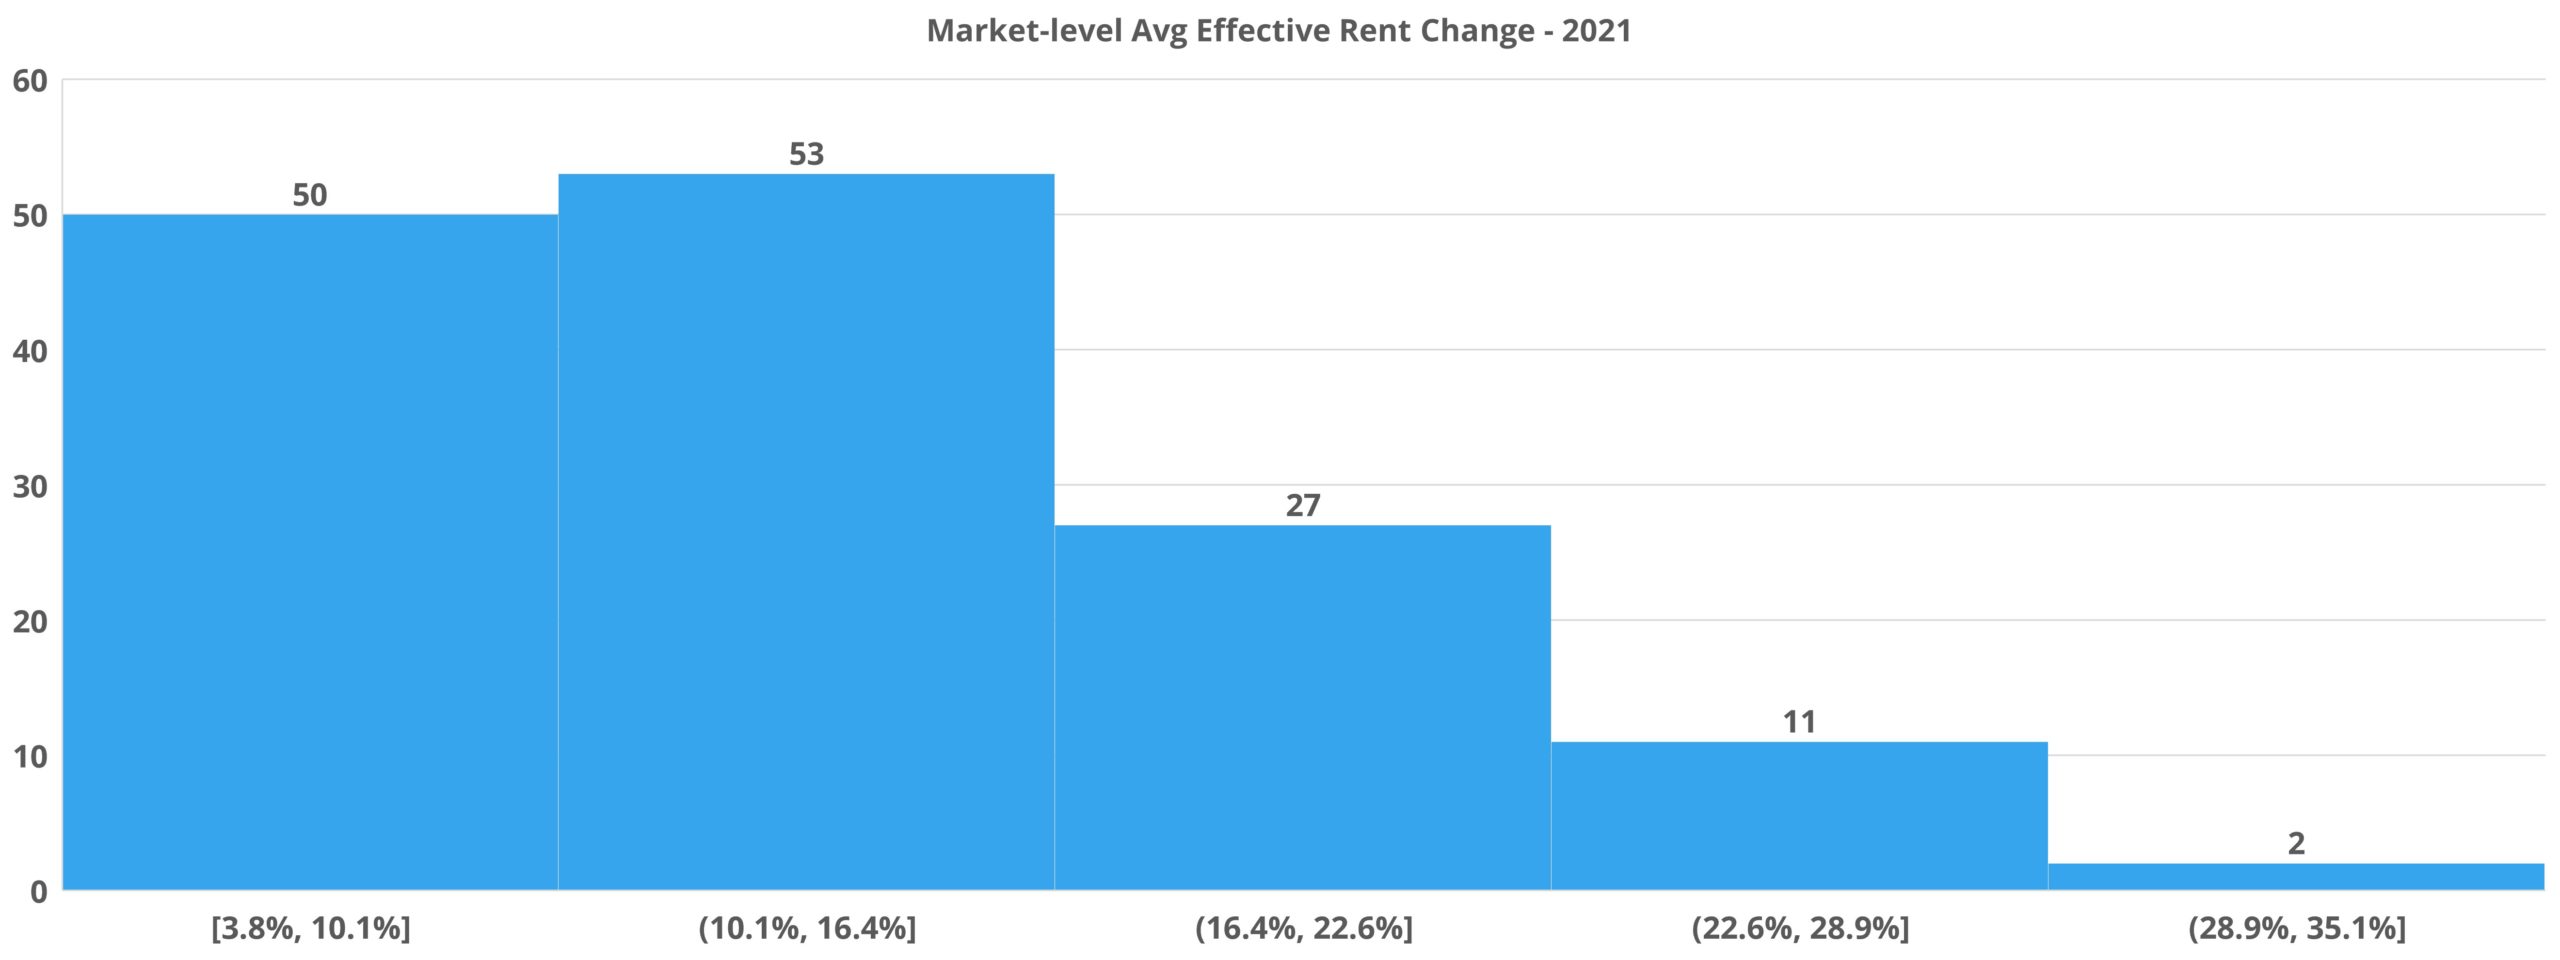 Market-level Avg Effective Rent Change - 2021